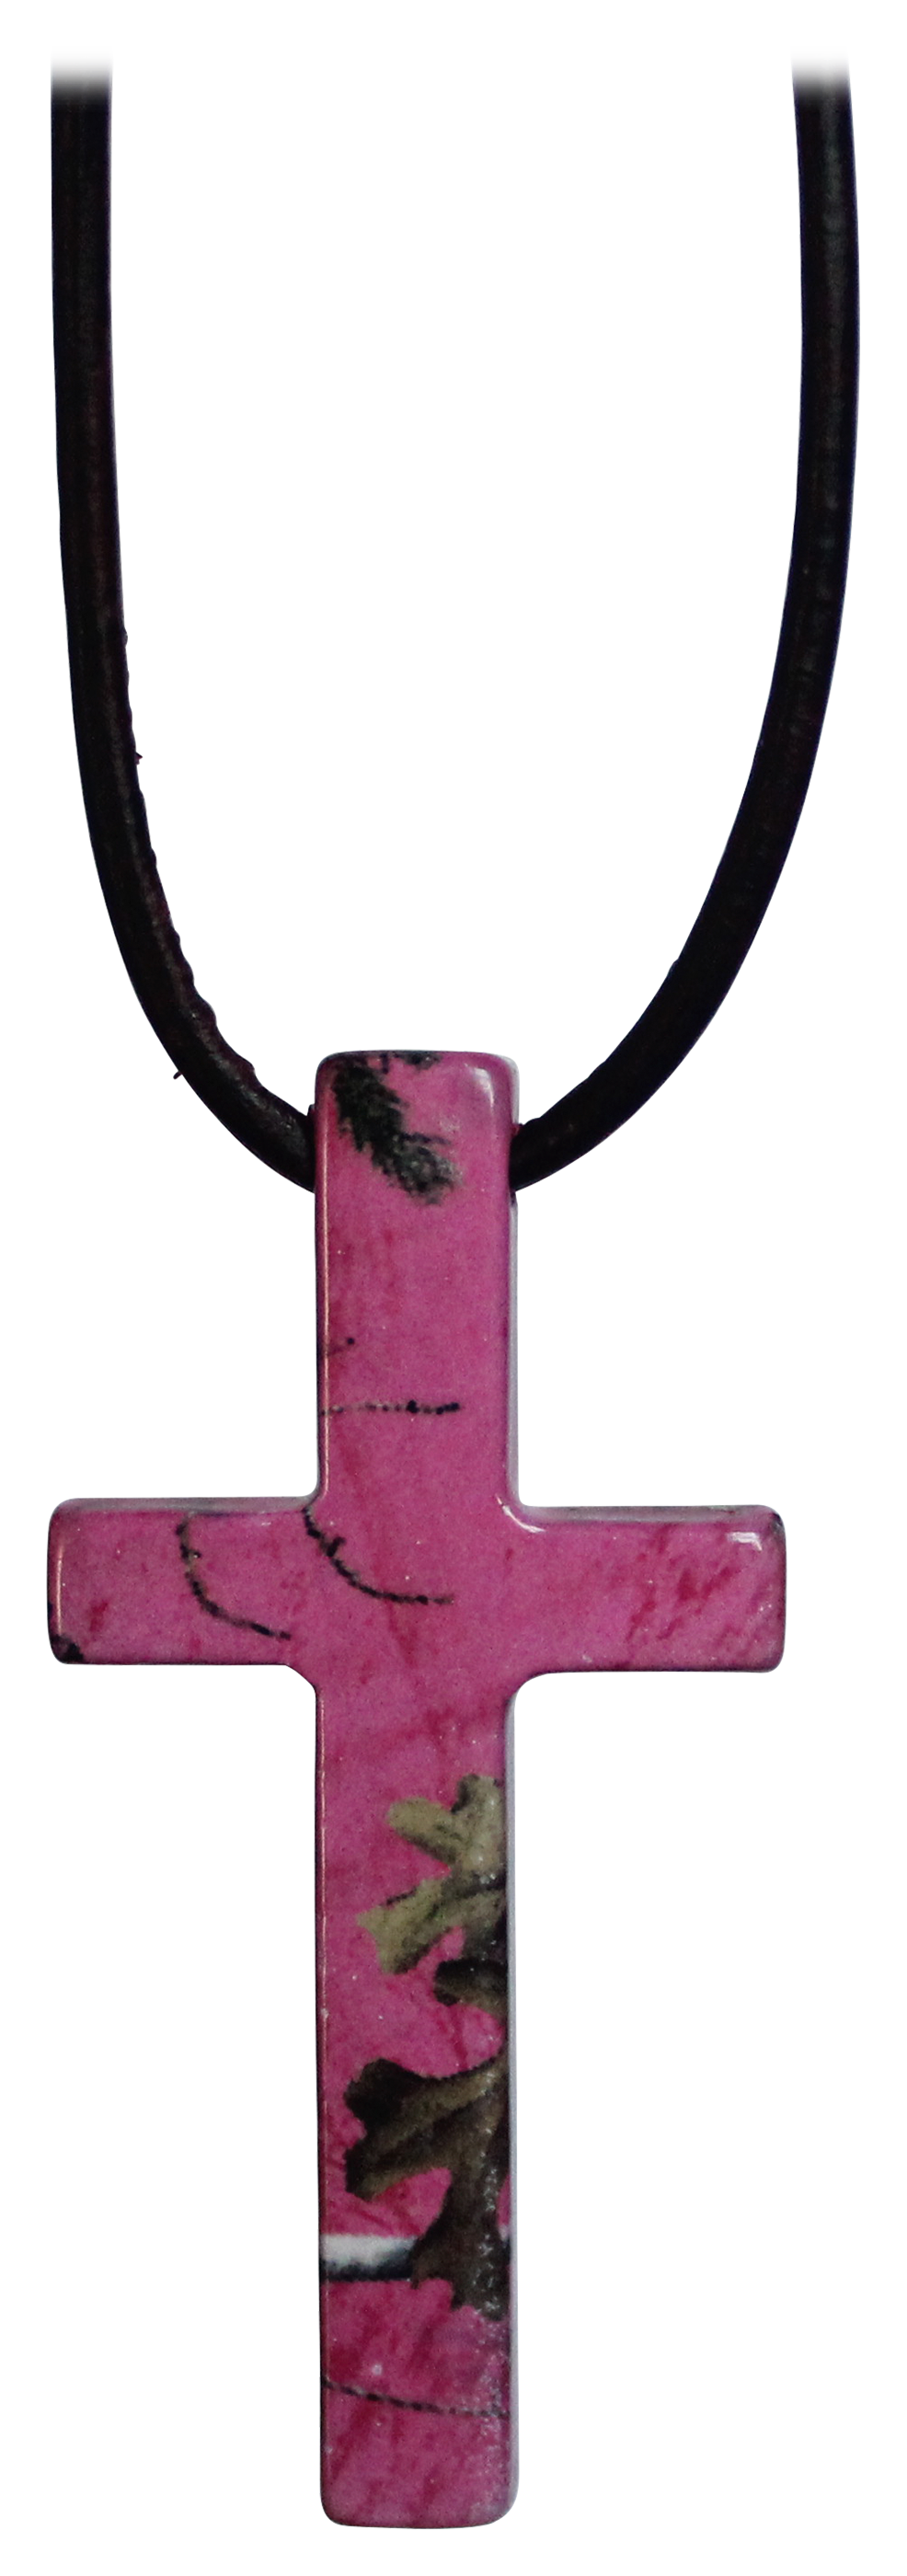  Camo Cross Necklace